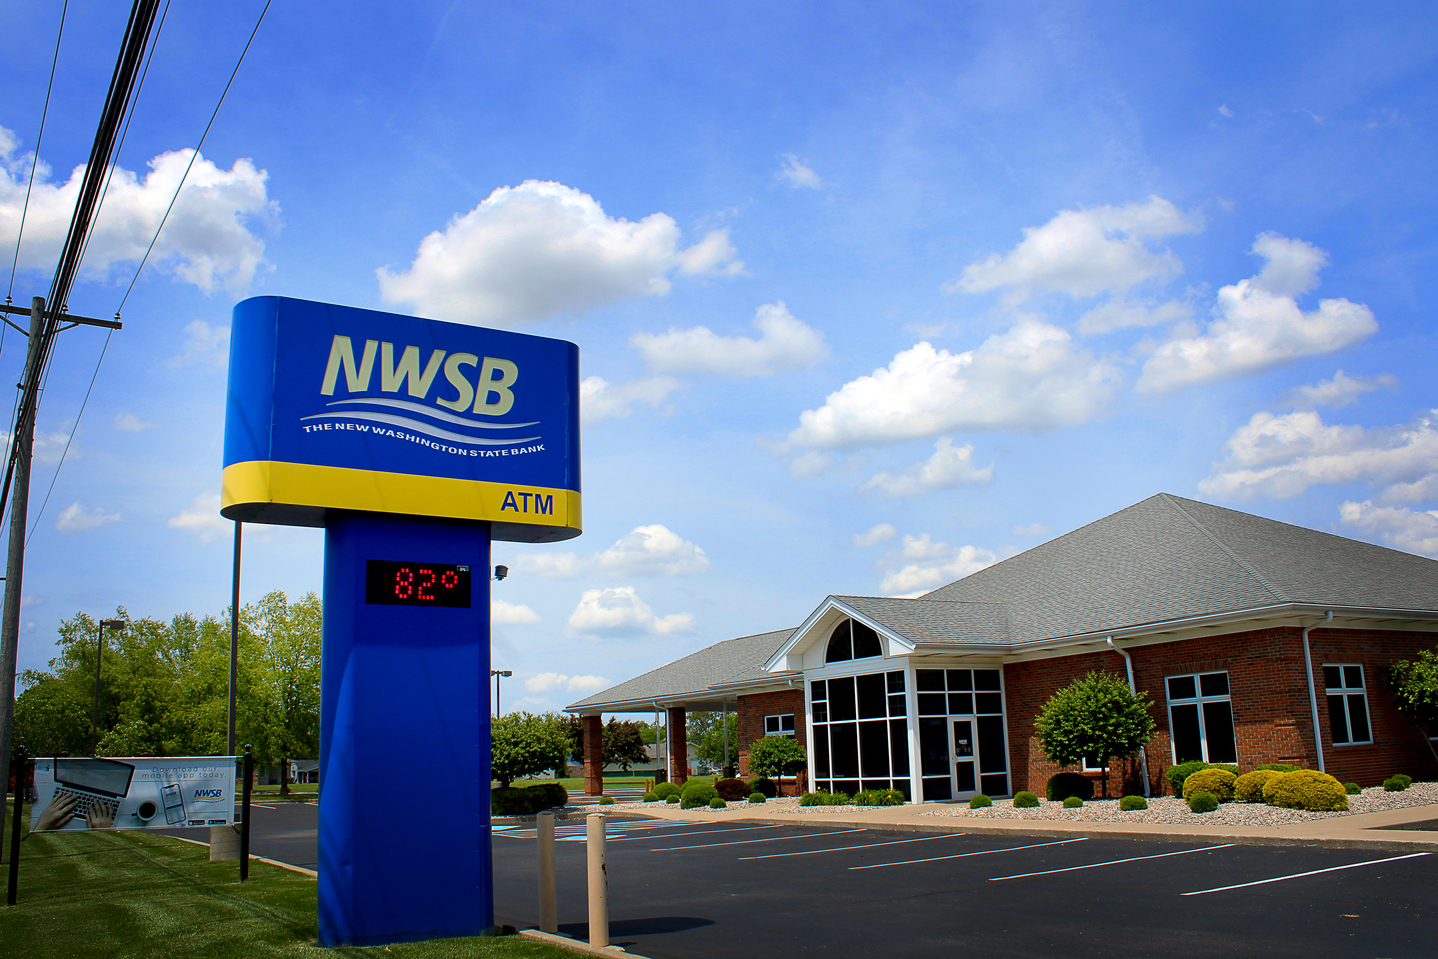 NWSB (New Washington State Bank)